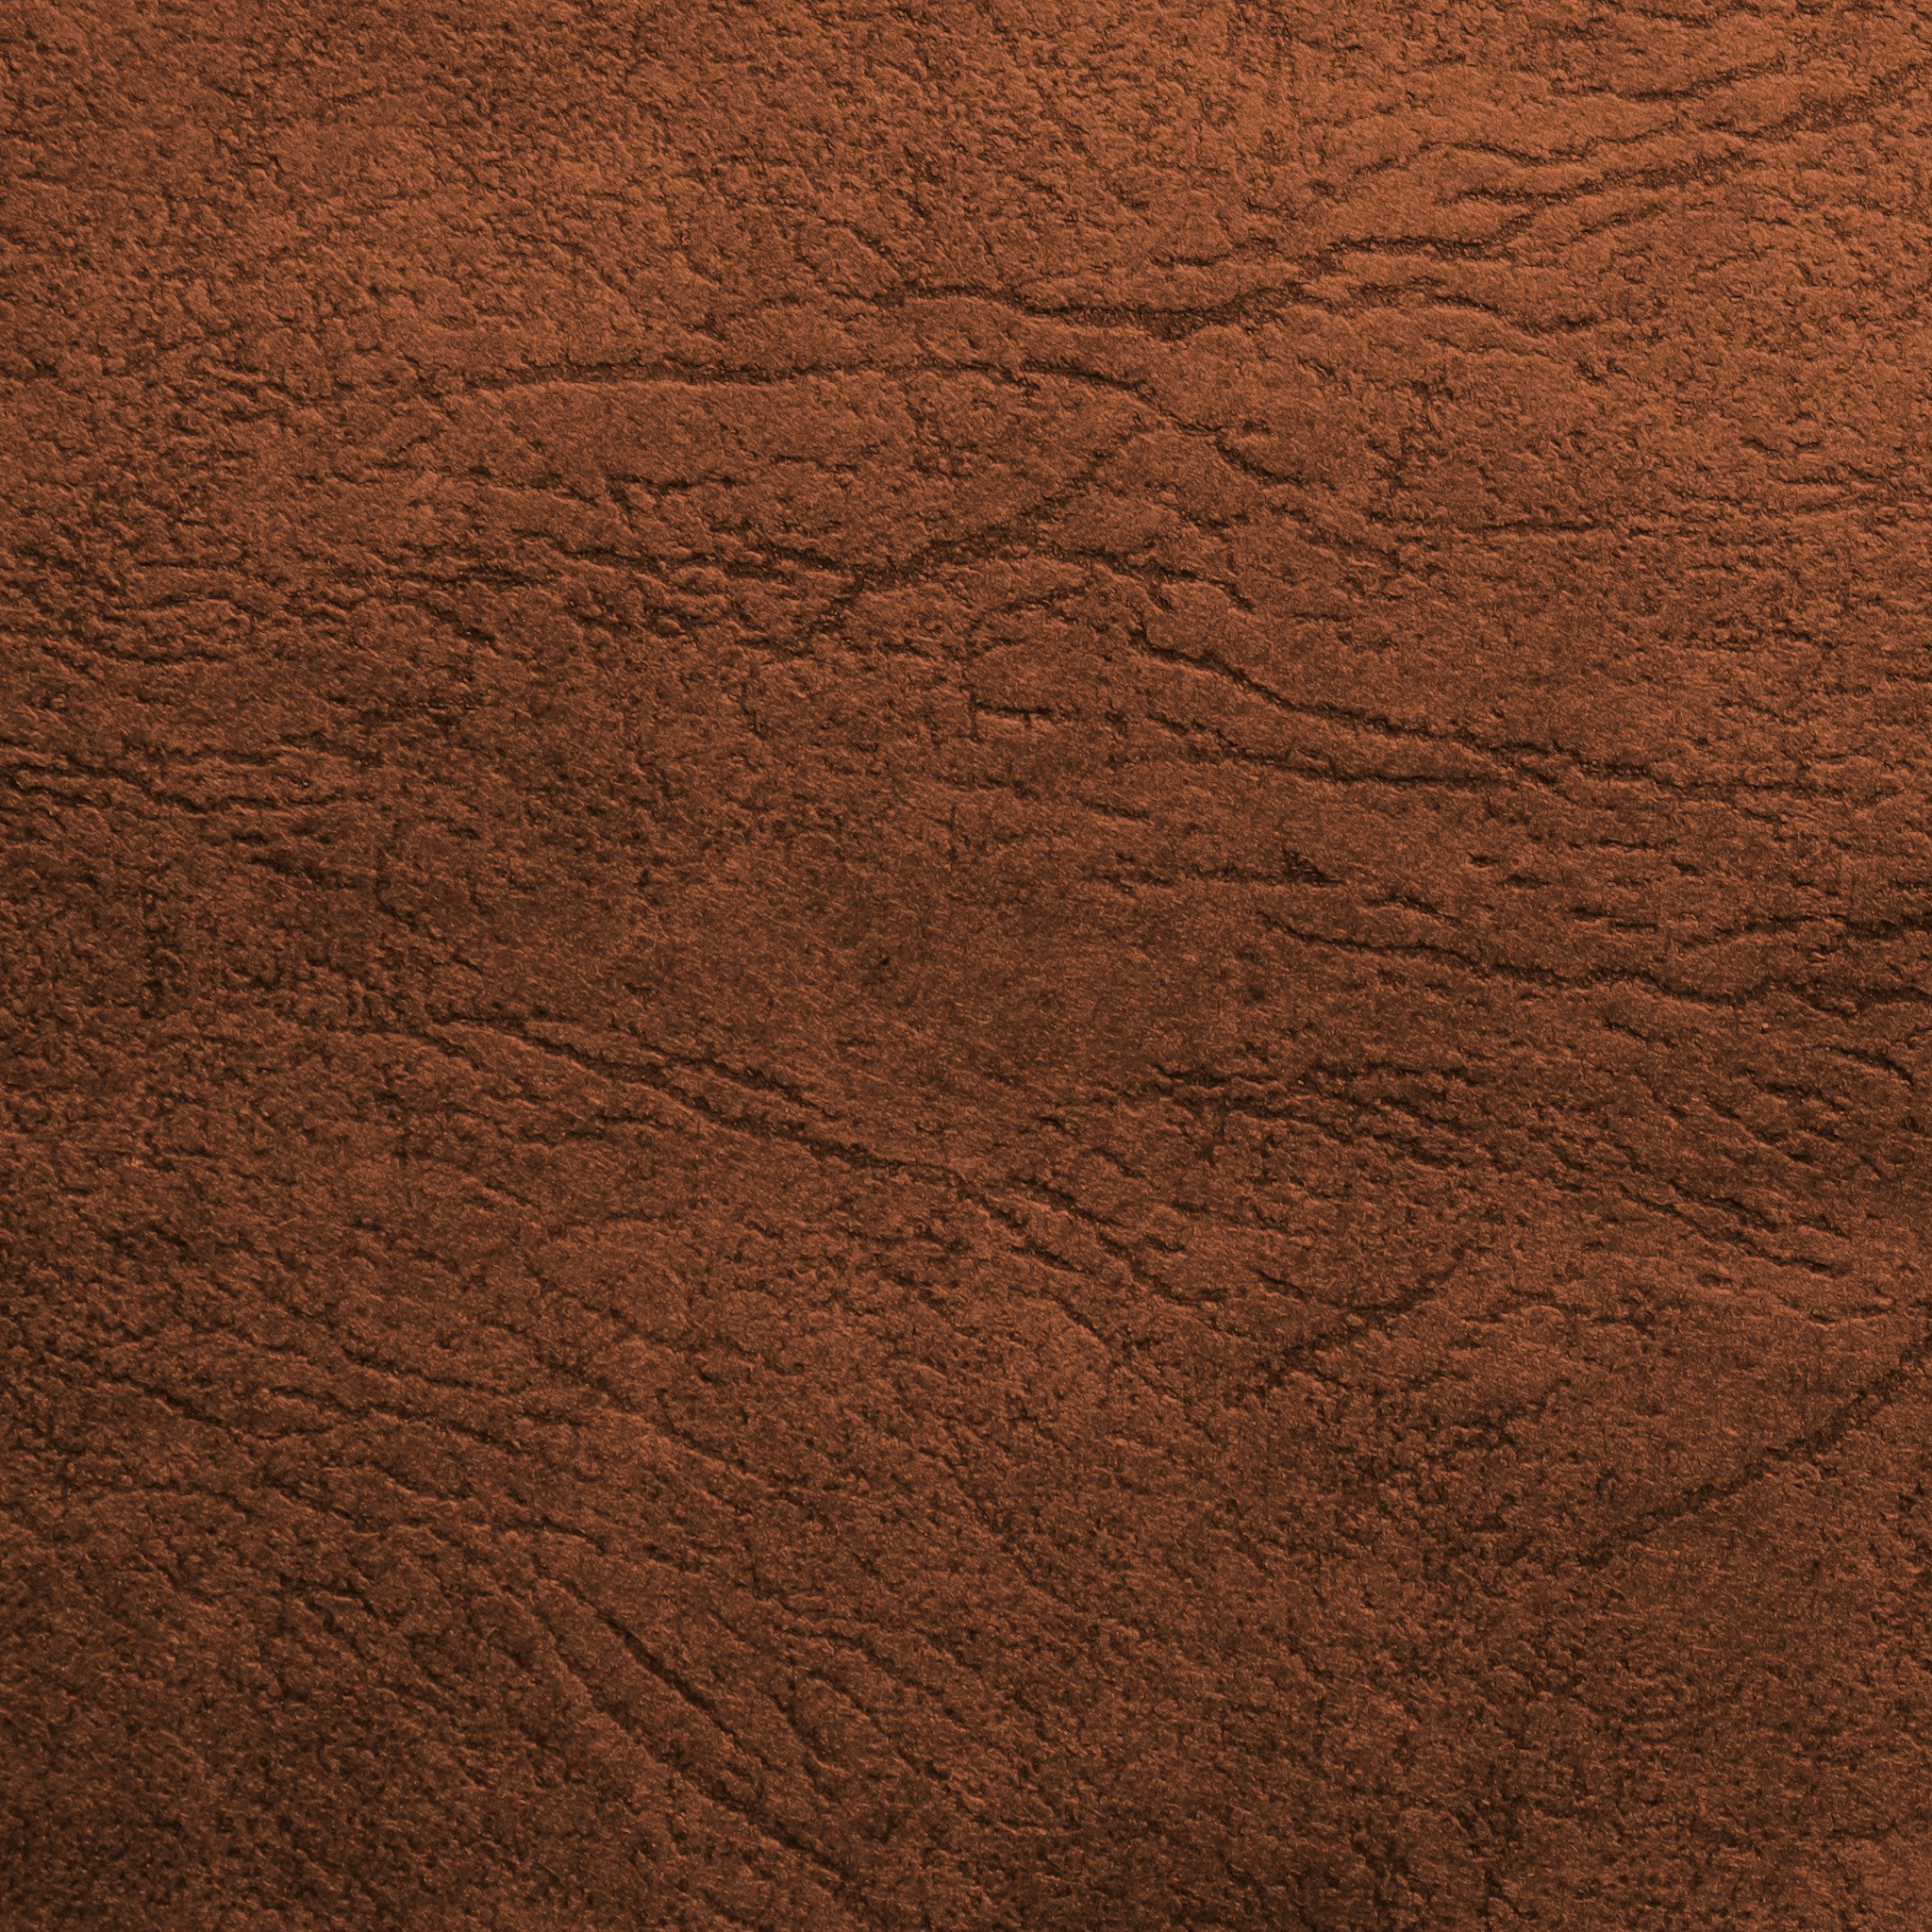 Leather Desktop Wallpaper, Leather Wallpaper Image HD